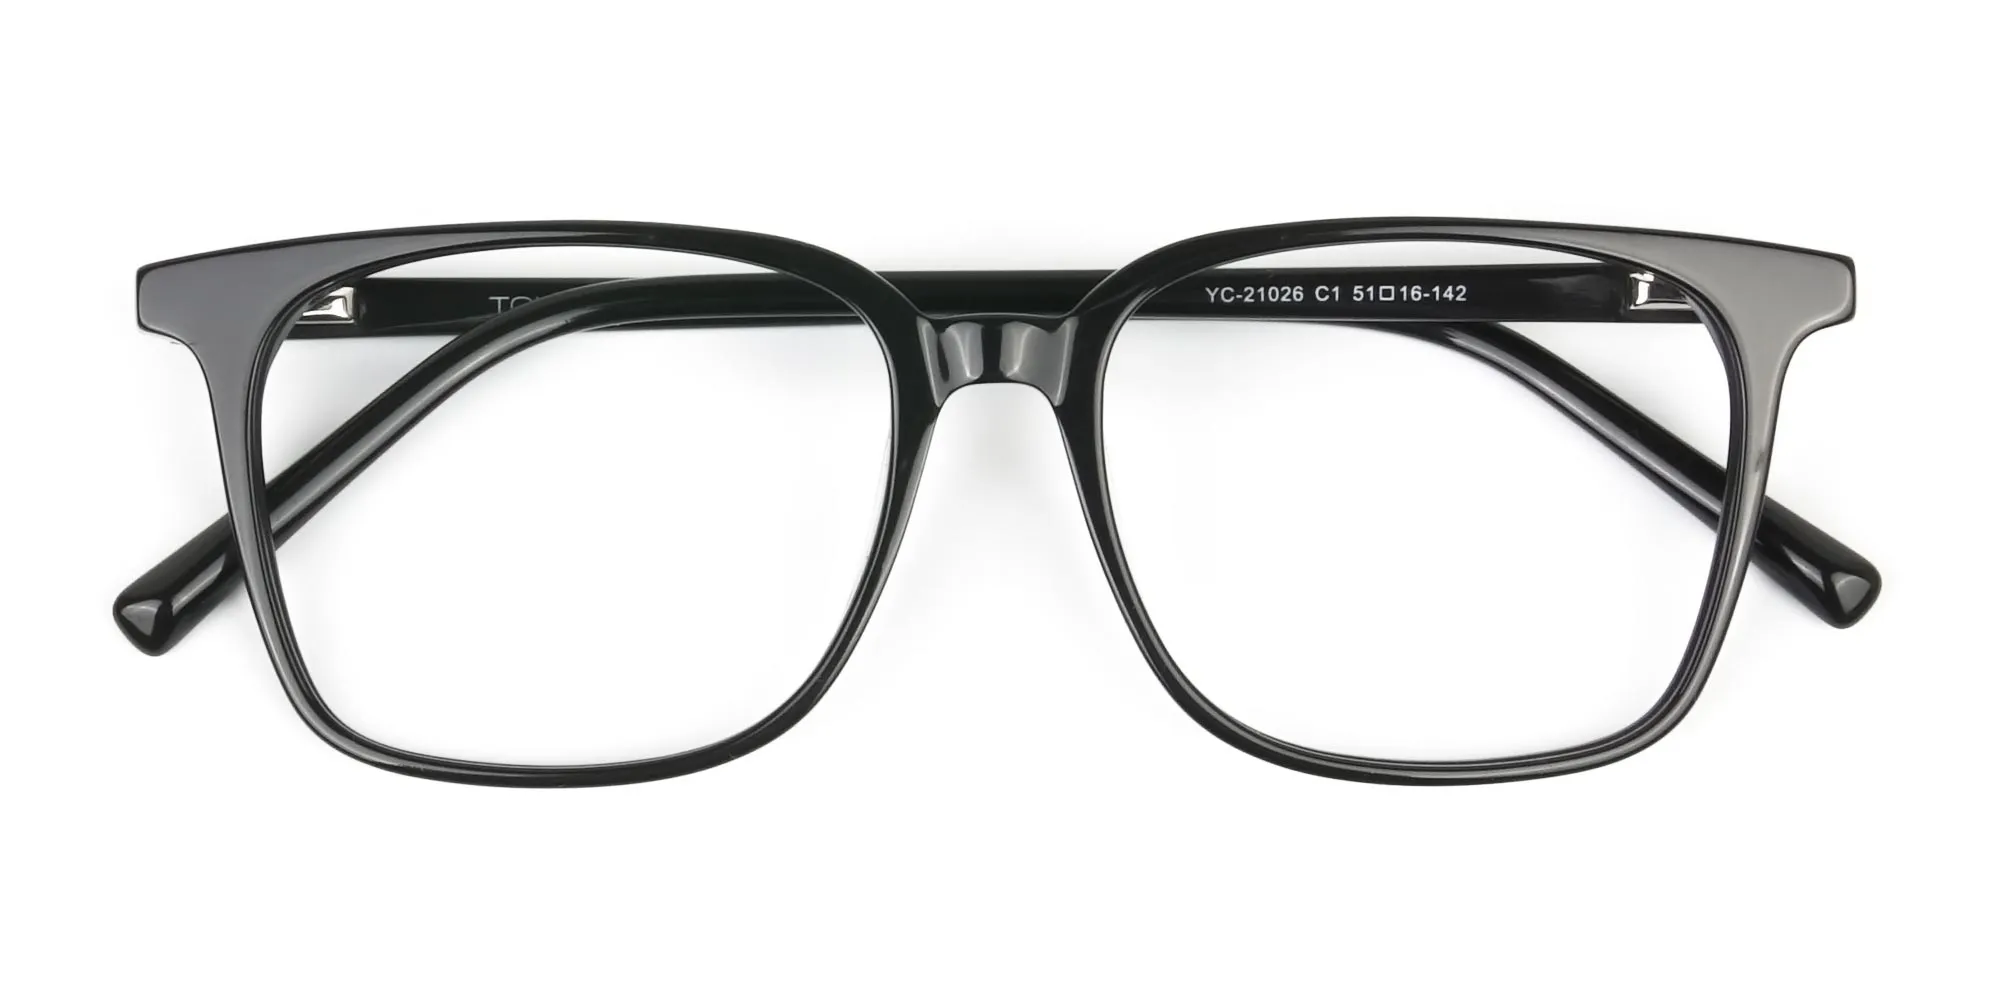 Wayfarer and Square Glasses in Black - 2